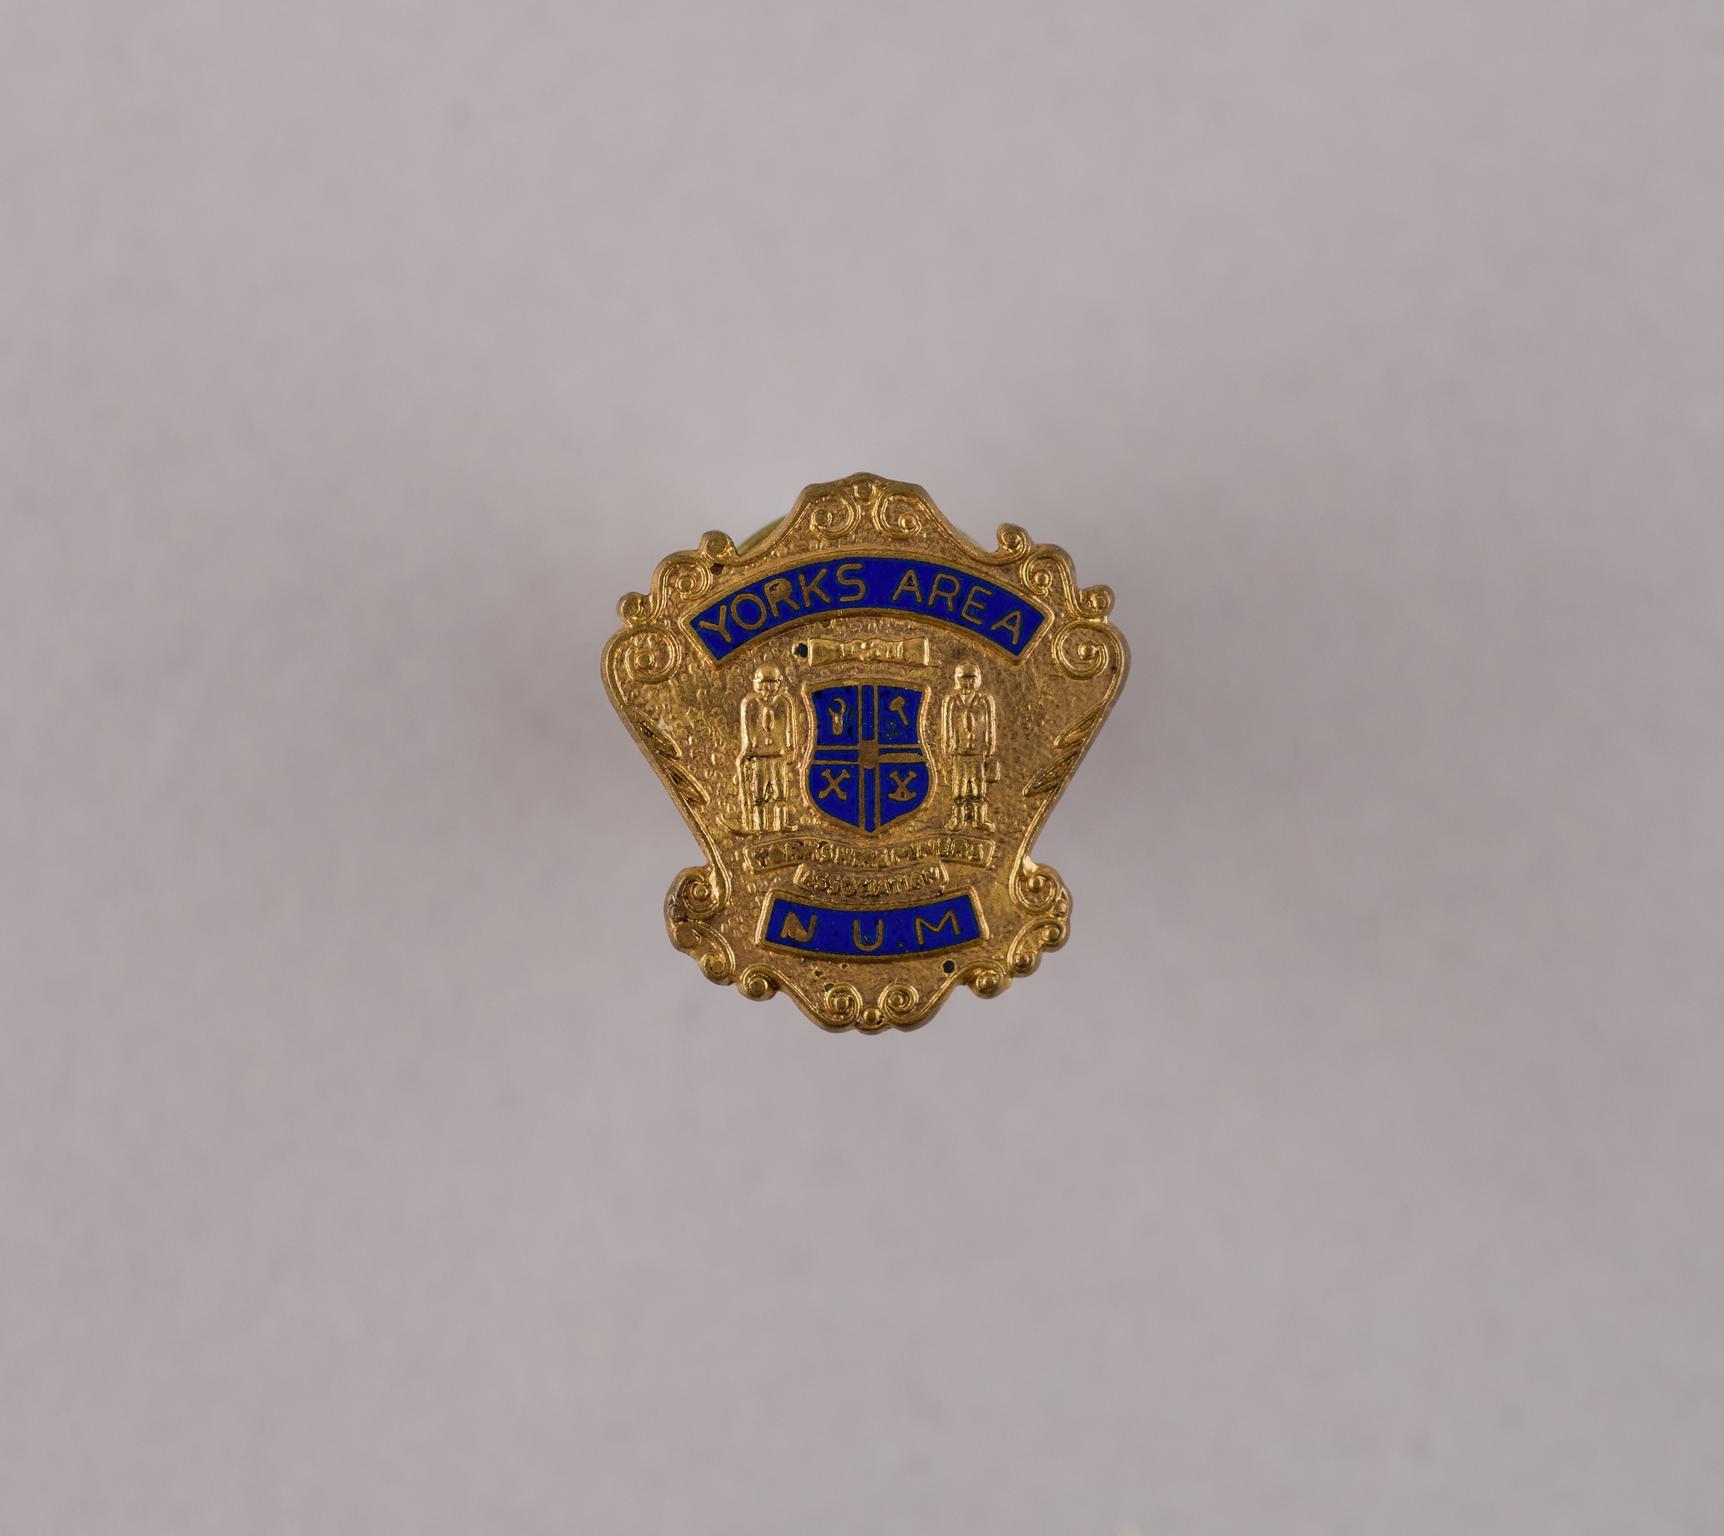 N.U.M. Yorks Area, badge